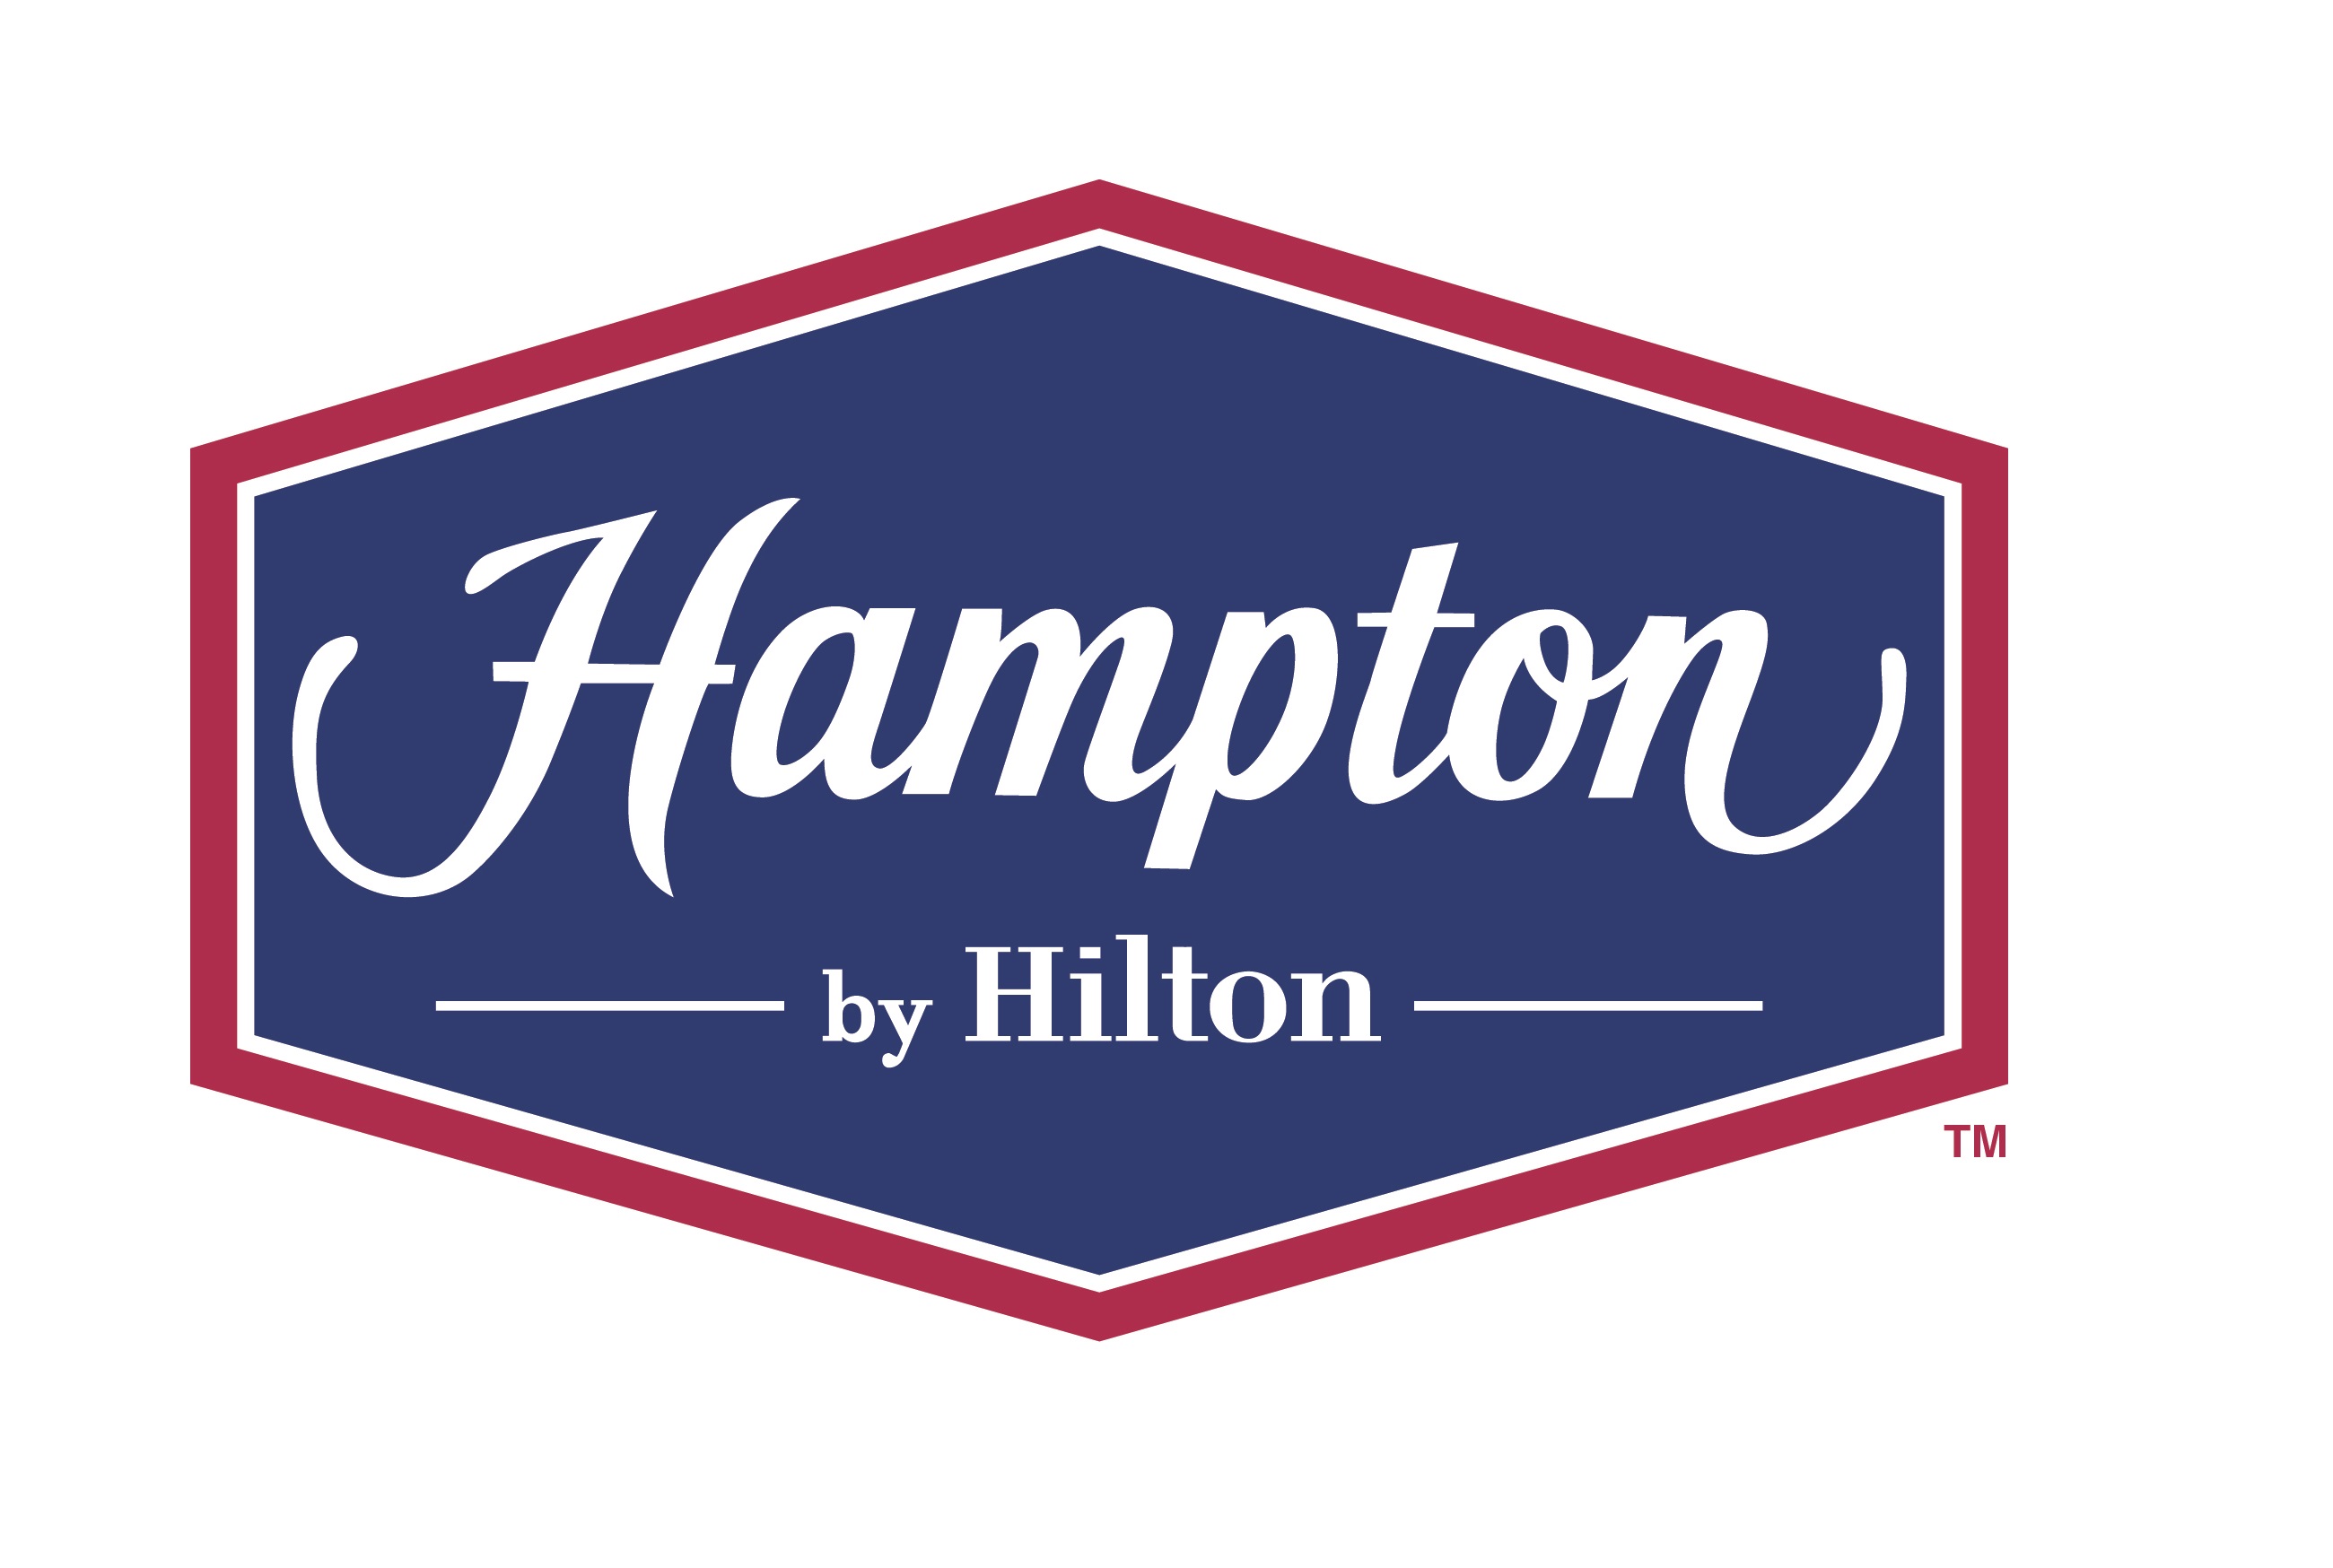 hampton_logo_TM - Copy.jpg